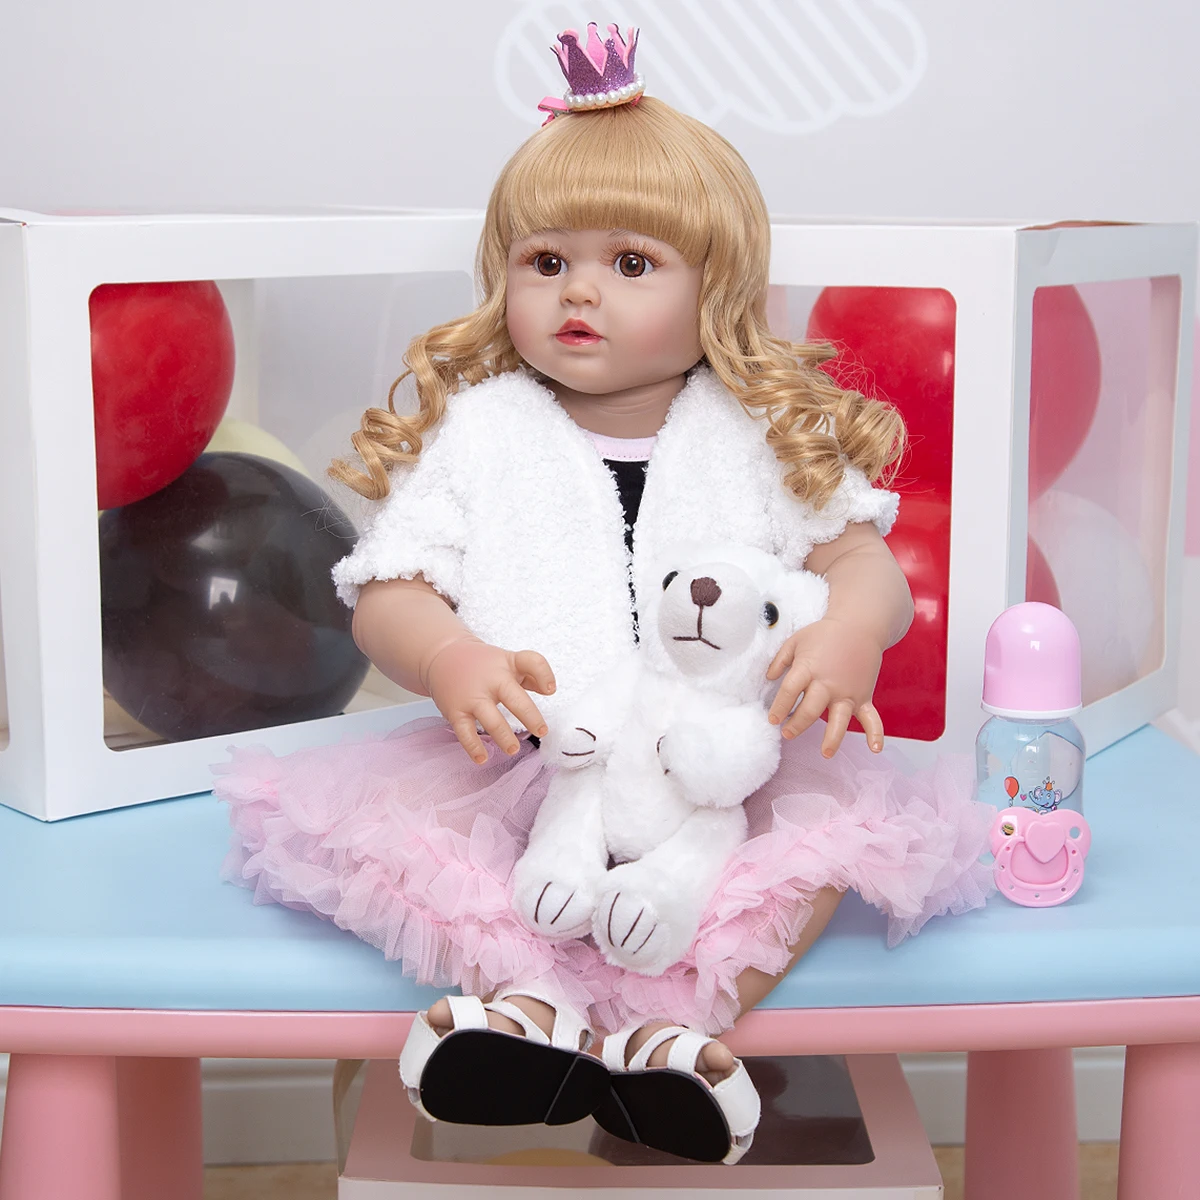 KEIUMI Reborn Dolls Full Vinyl Body 57cm Lifelike Fashion Princess Baby Doll Boneca Reborn Toy For Children's Day Gift 5